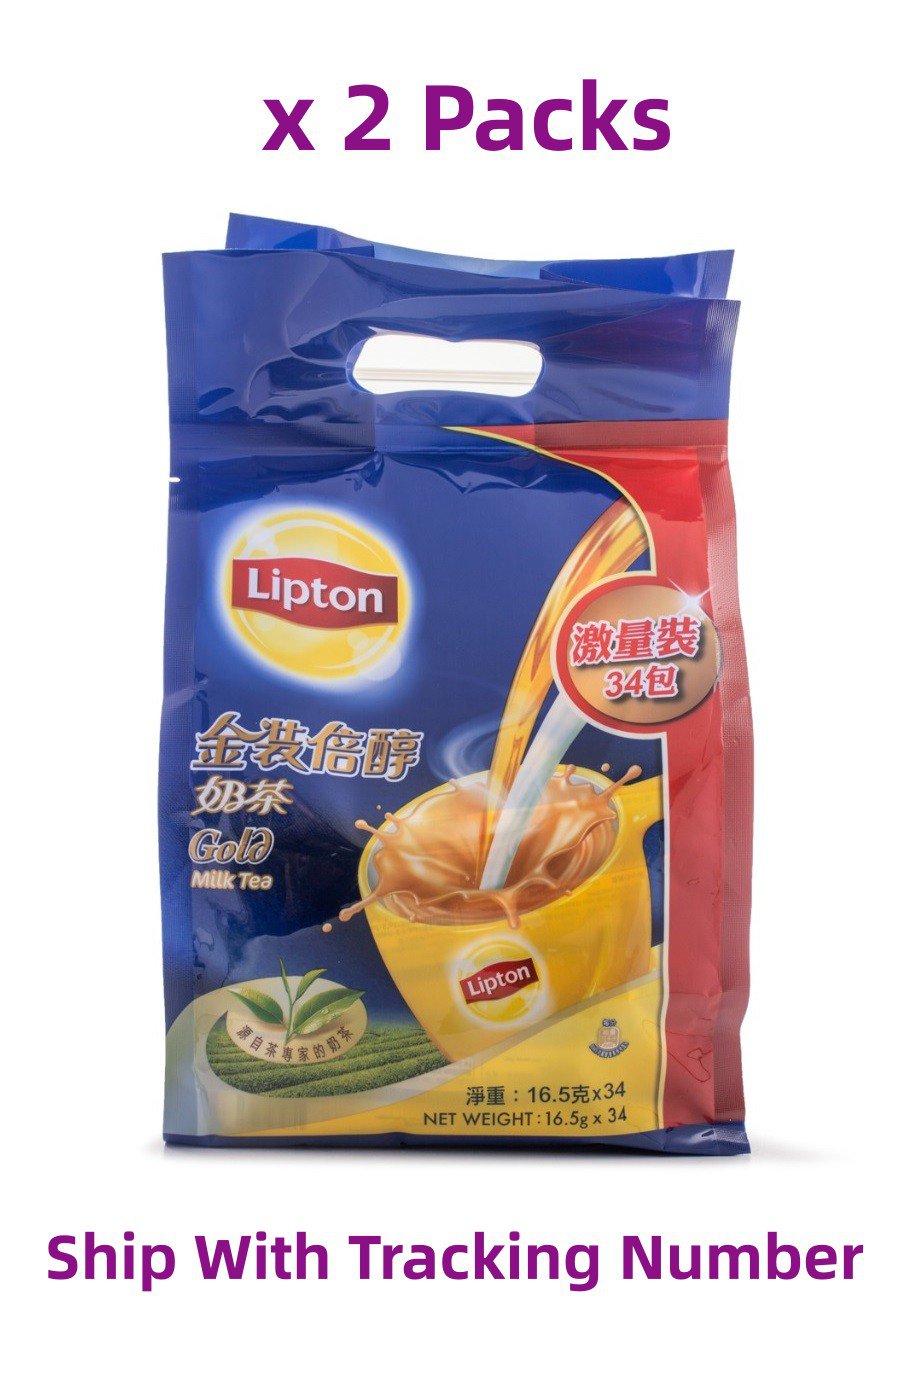 Lipton Golden Milk Tea 34 pieces [16.5g x 34] x 2 Packs